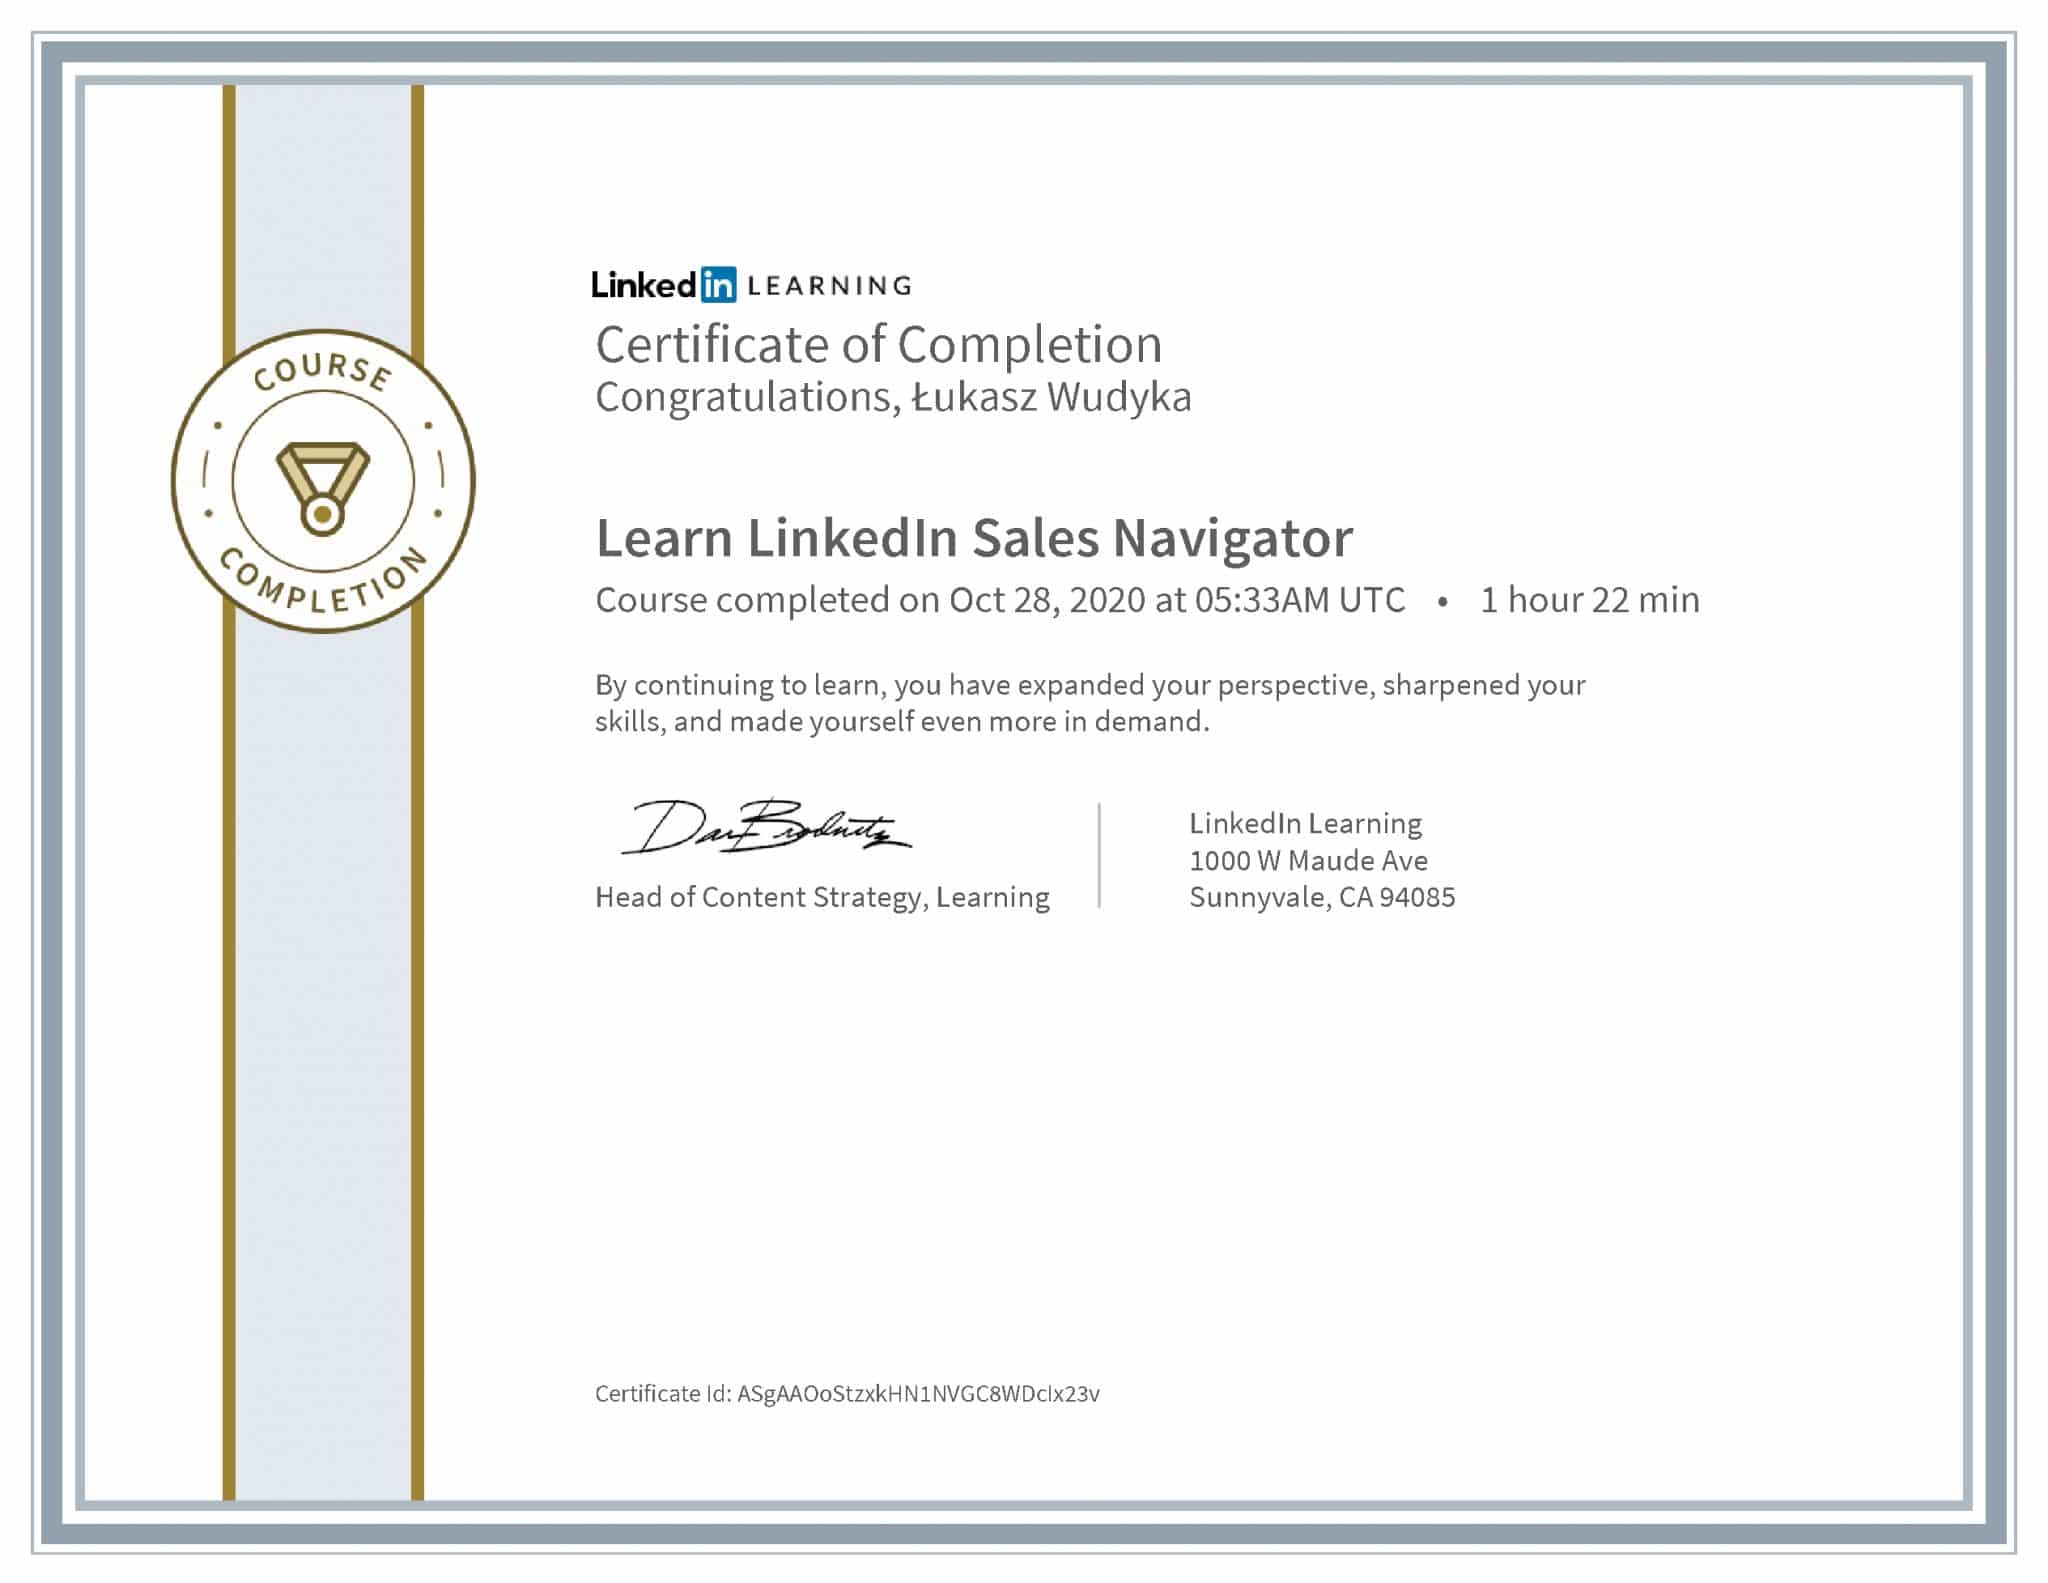 Łukasz Wudyka certyfikat LinkedIn Learn LinkedIn Sales Navigator